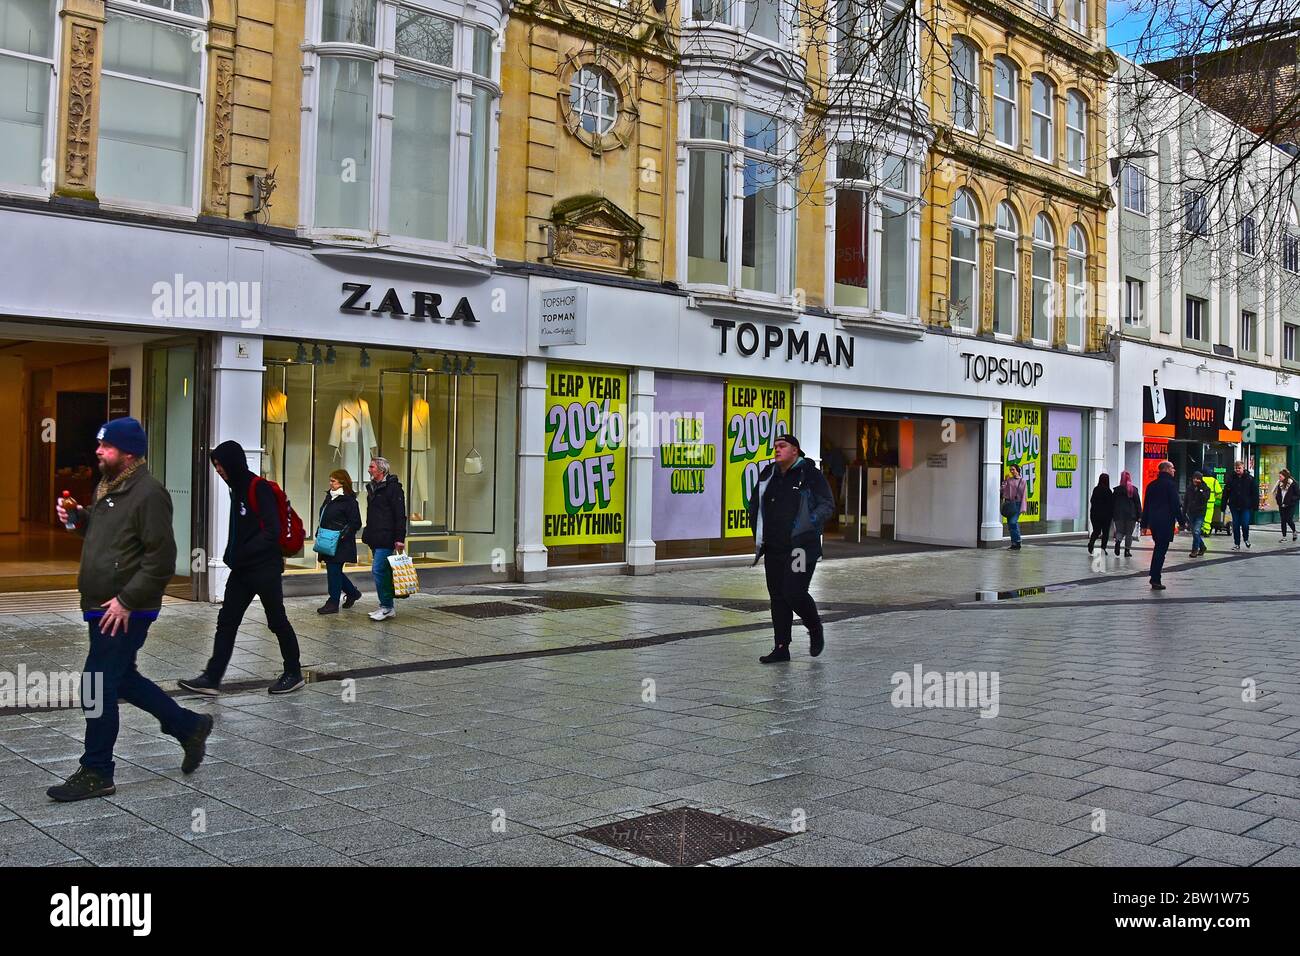 Stylish fashion shops including Zara 